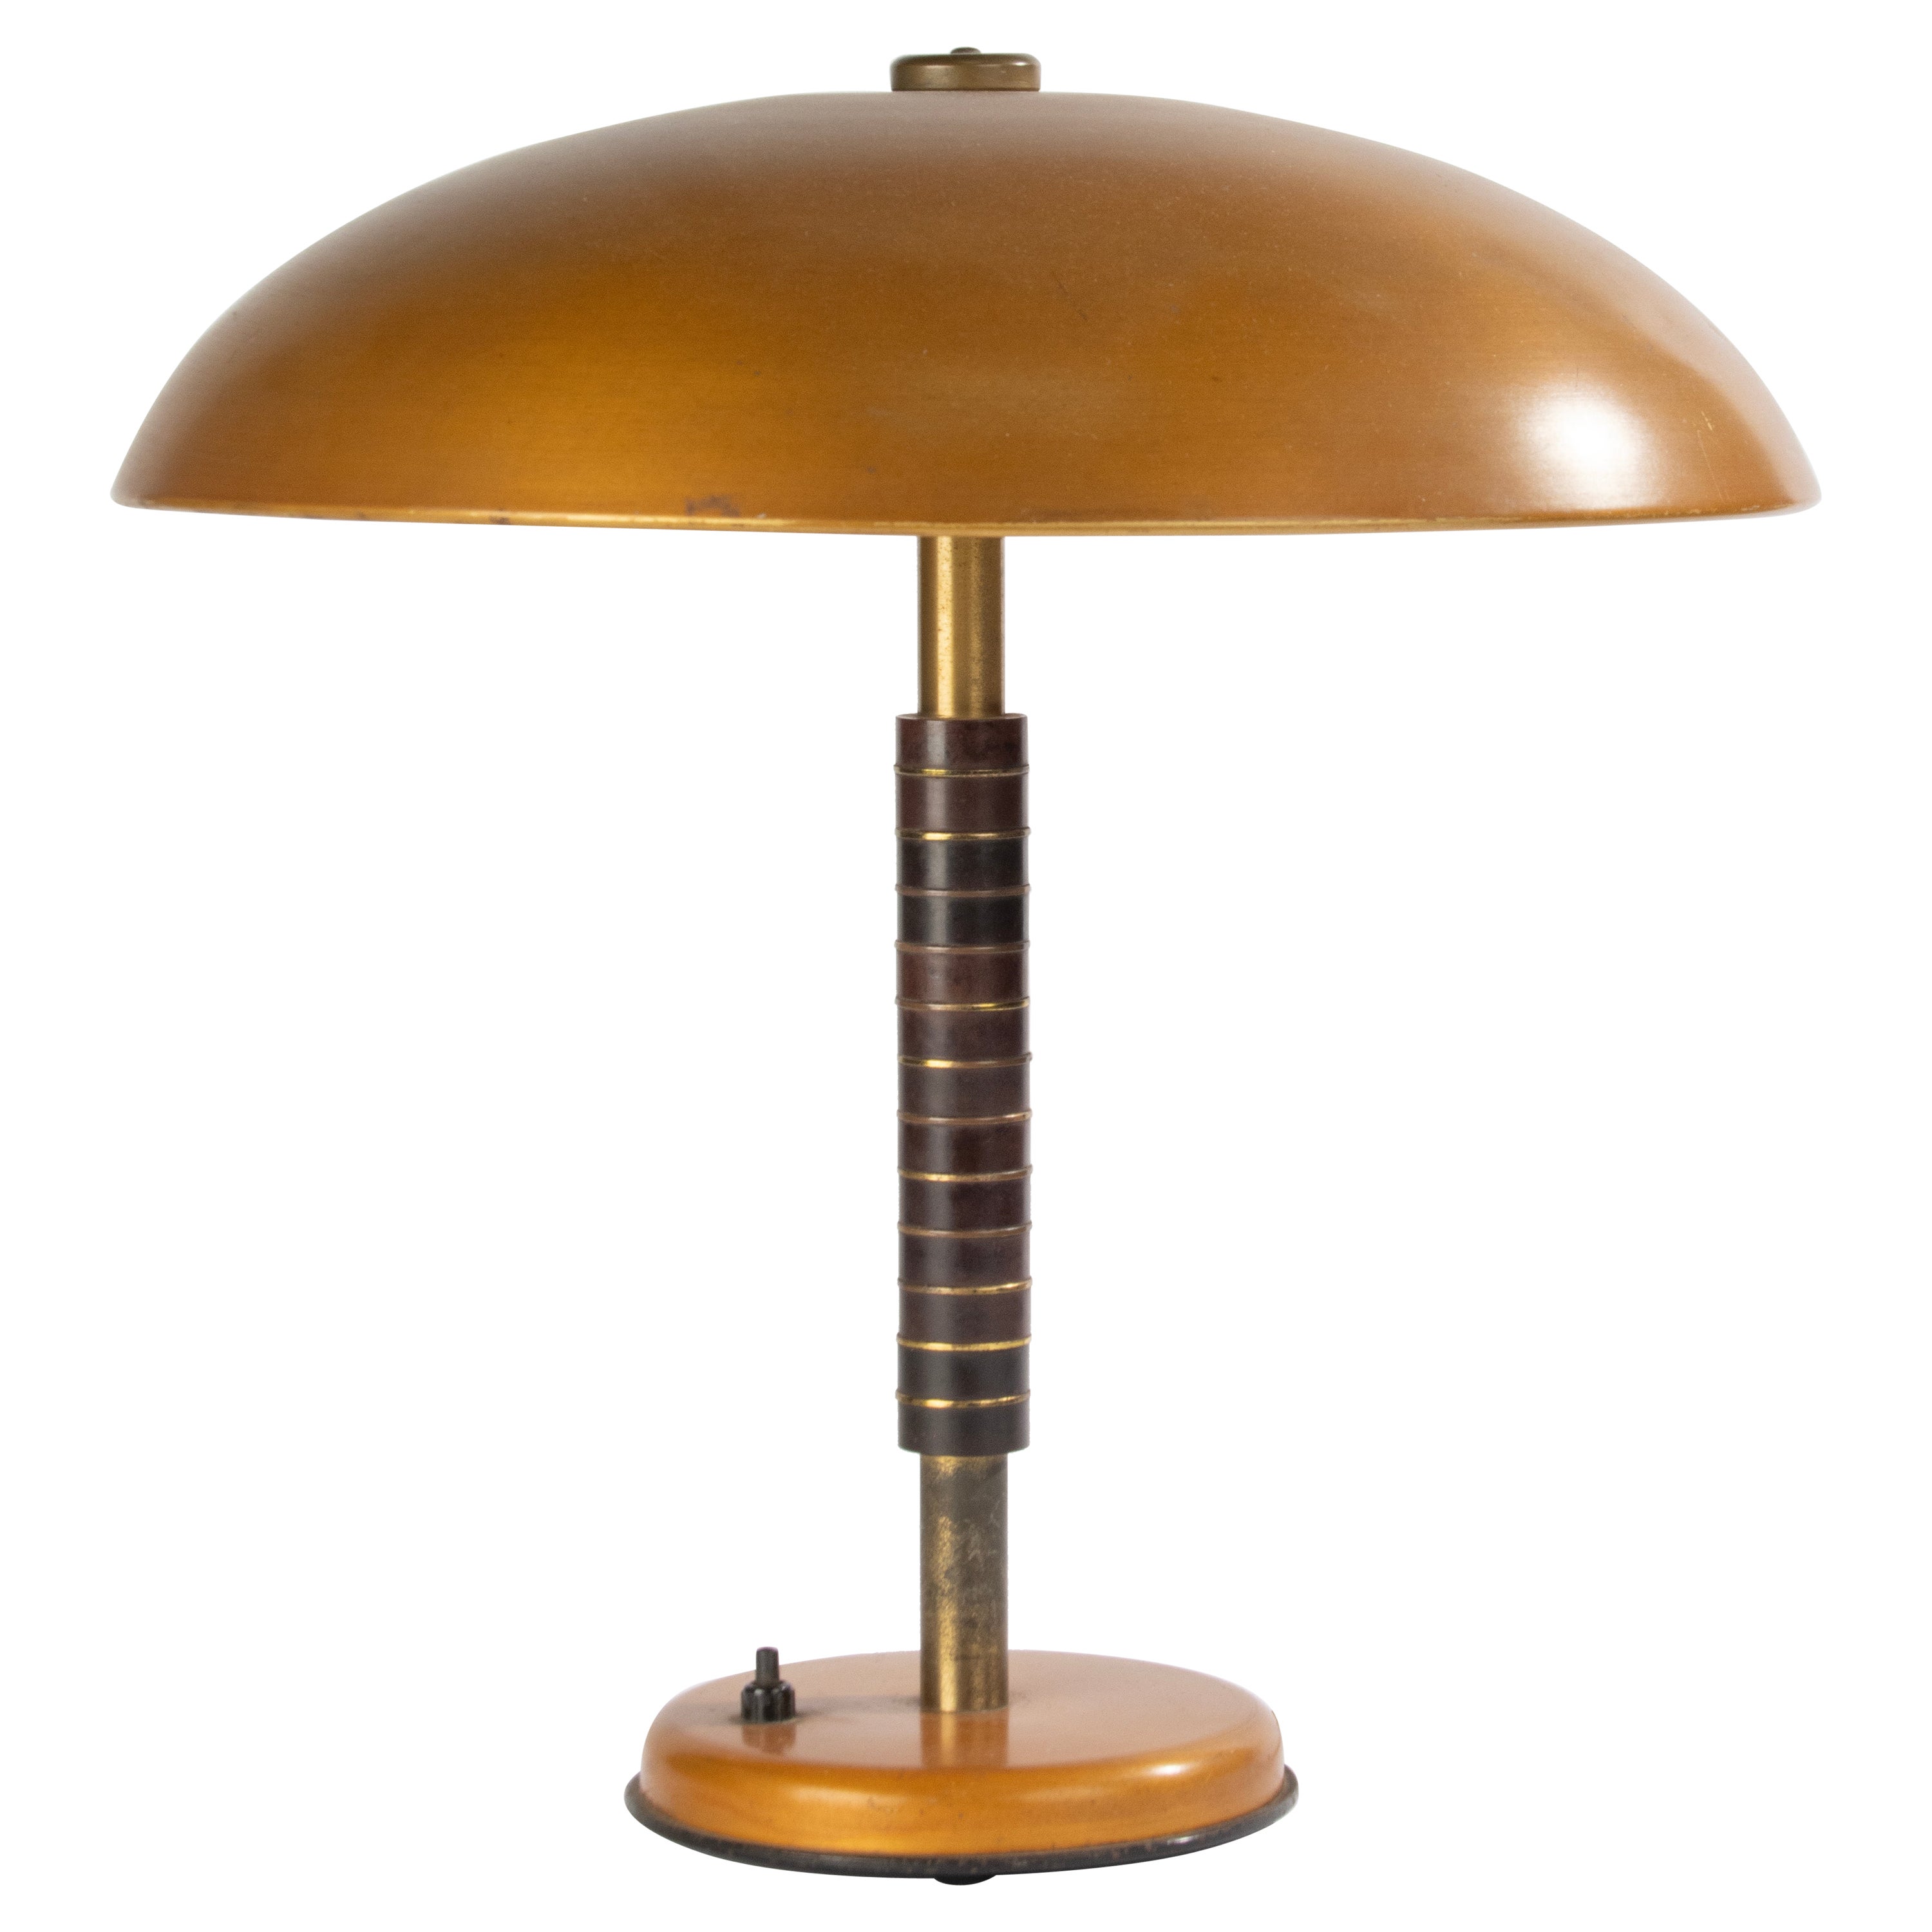 Vintage Bauhaus Table Lamp - 1940's - Bakelite and Metal 